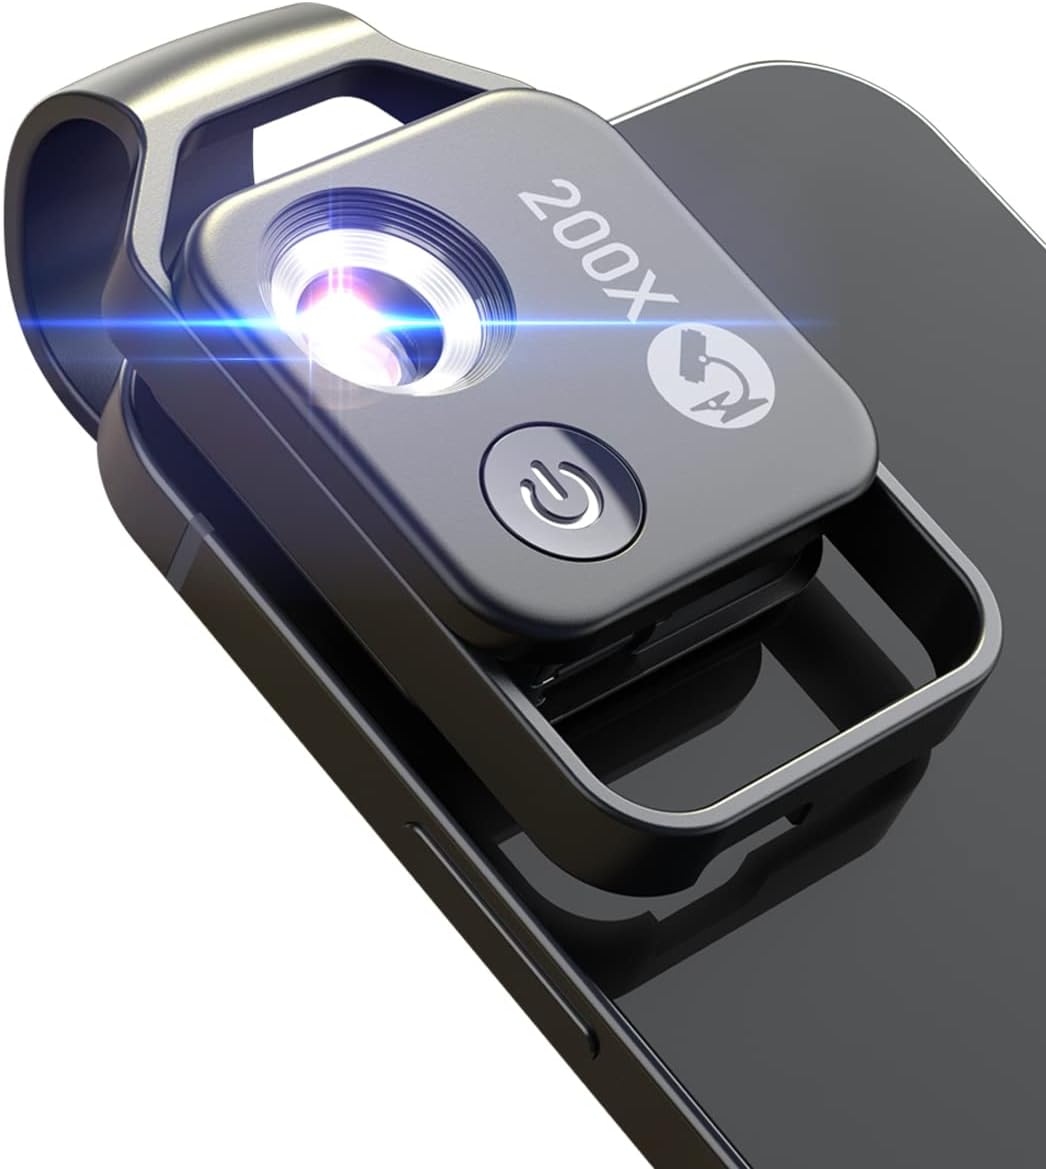 200X Phone Mini Pocket Microscope with LED Light/Universal Clip, Portable Digital Microscope Camera Attachment